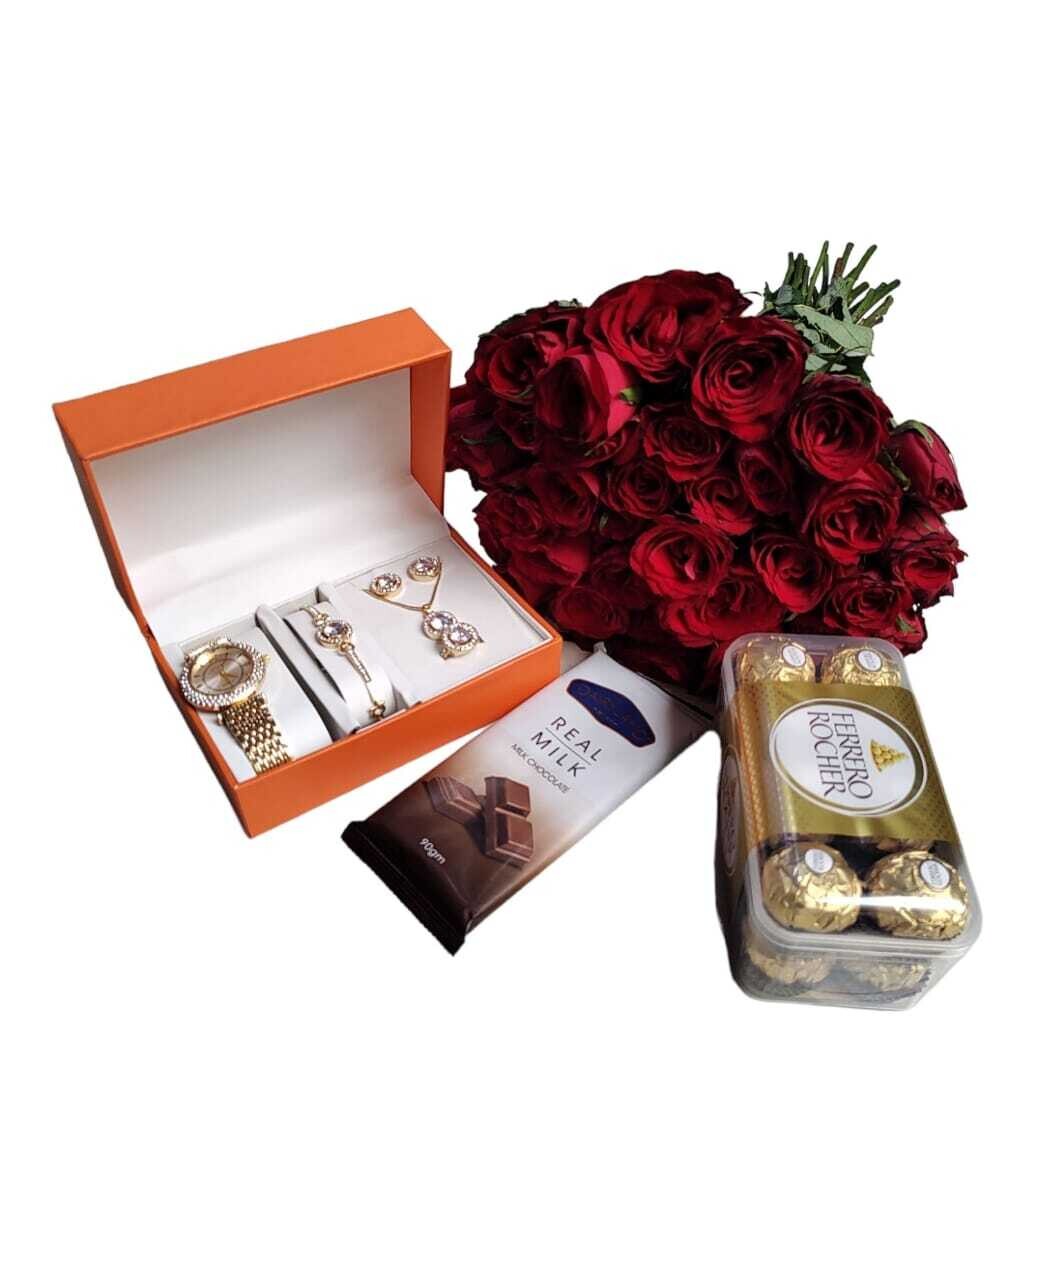 Ladies lovely gift pack flowers, ladies giftset, chocolate